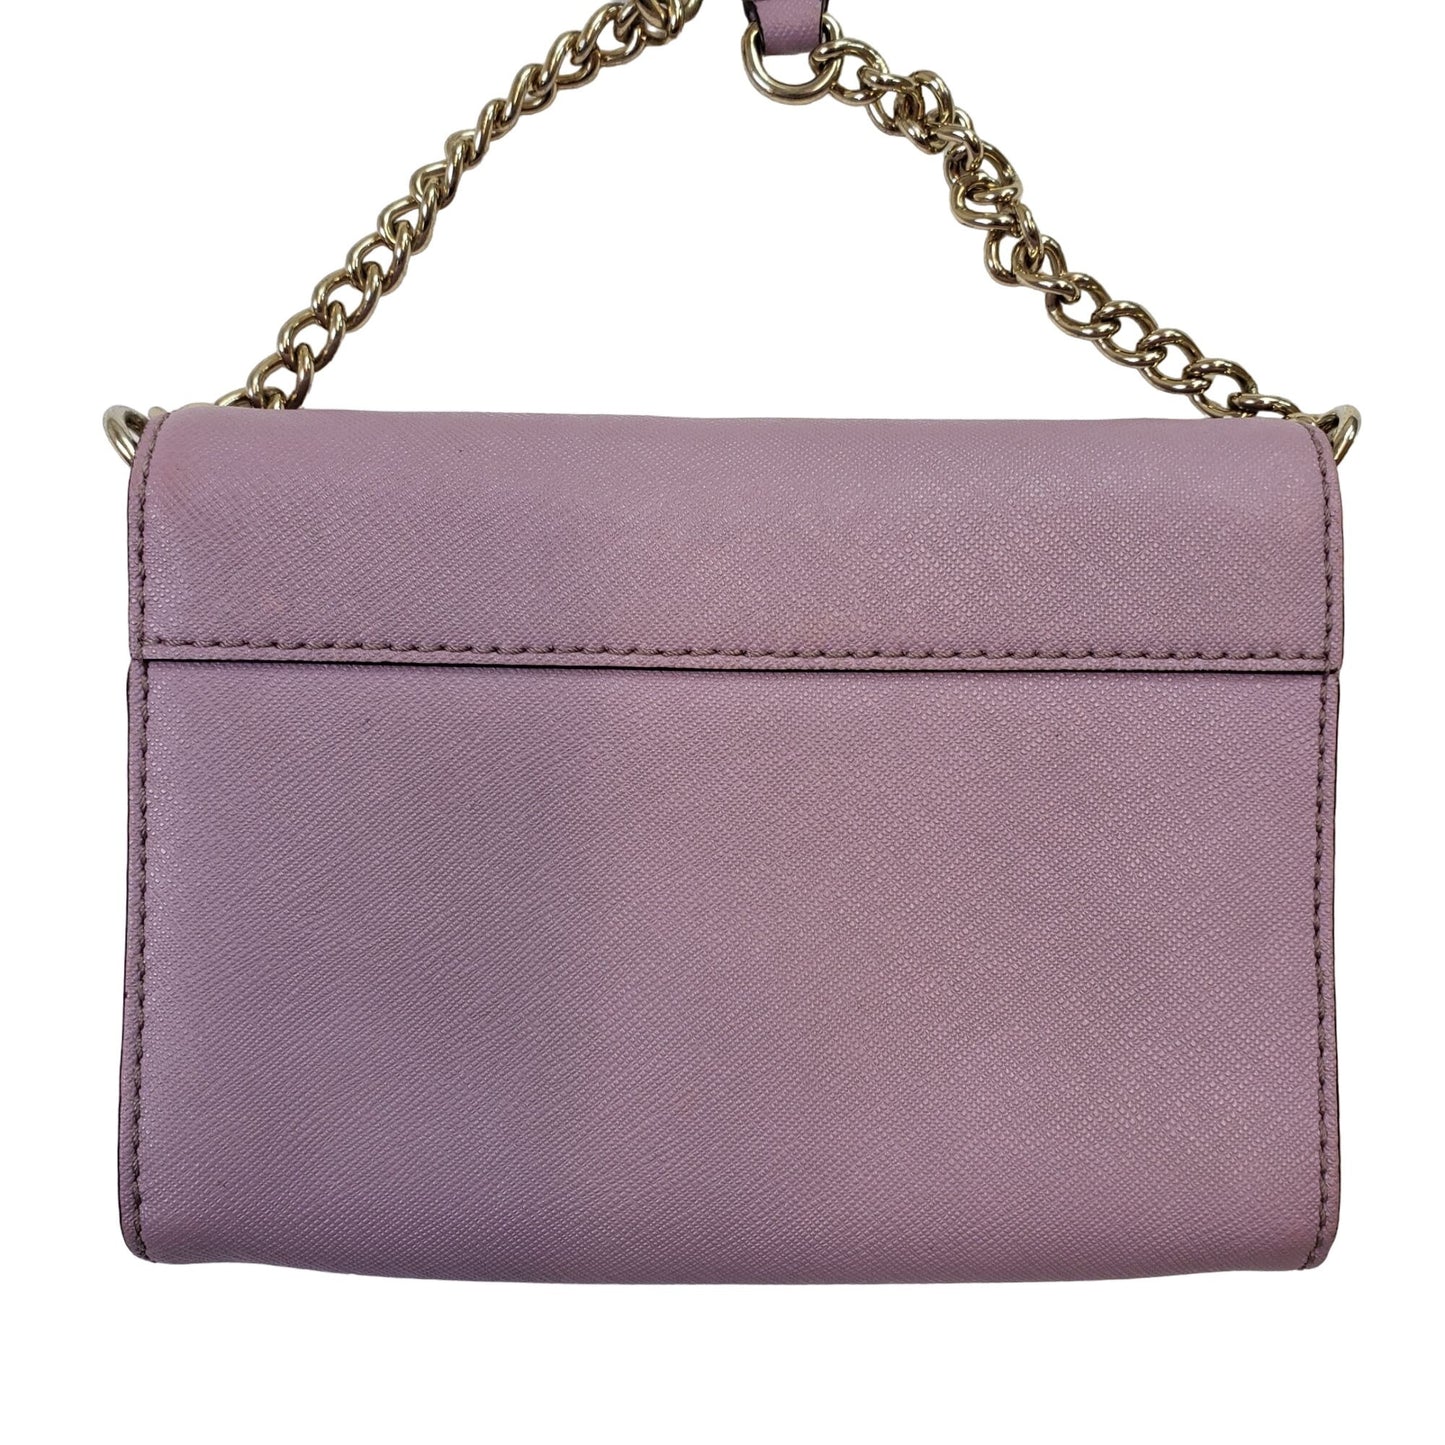 Kate Spade Pink Saffiano Leather Crossbody Bag